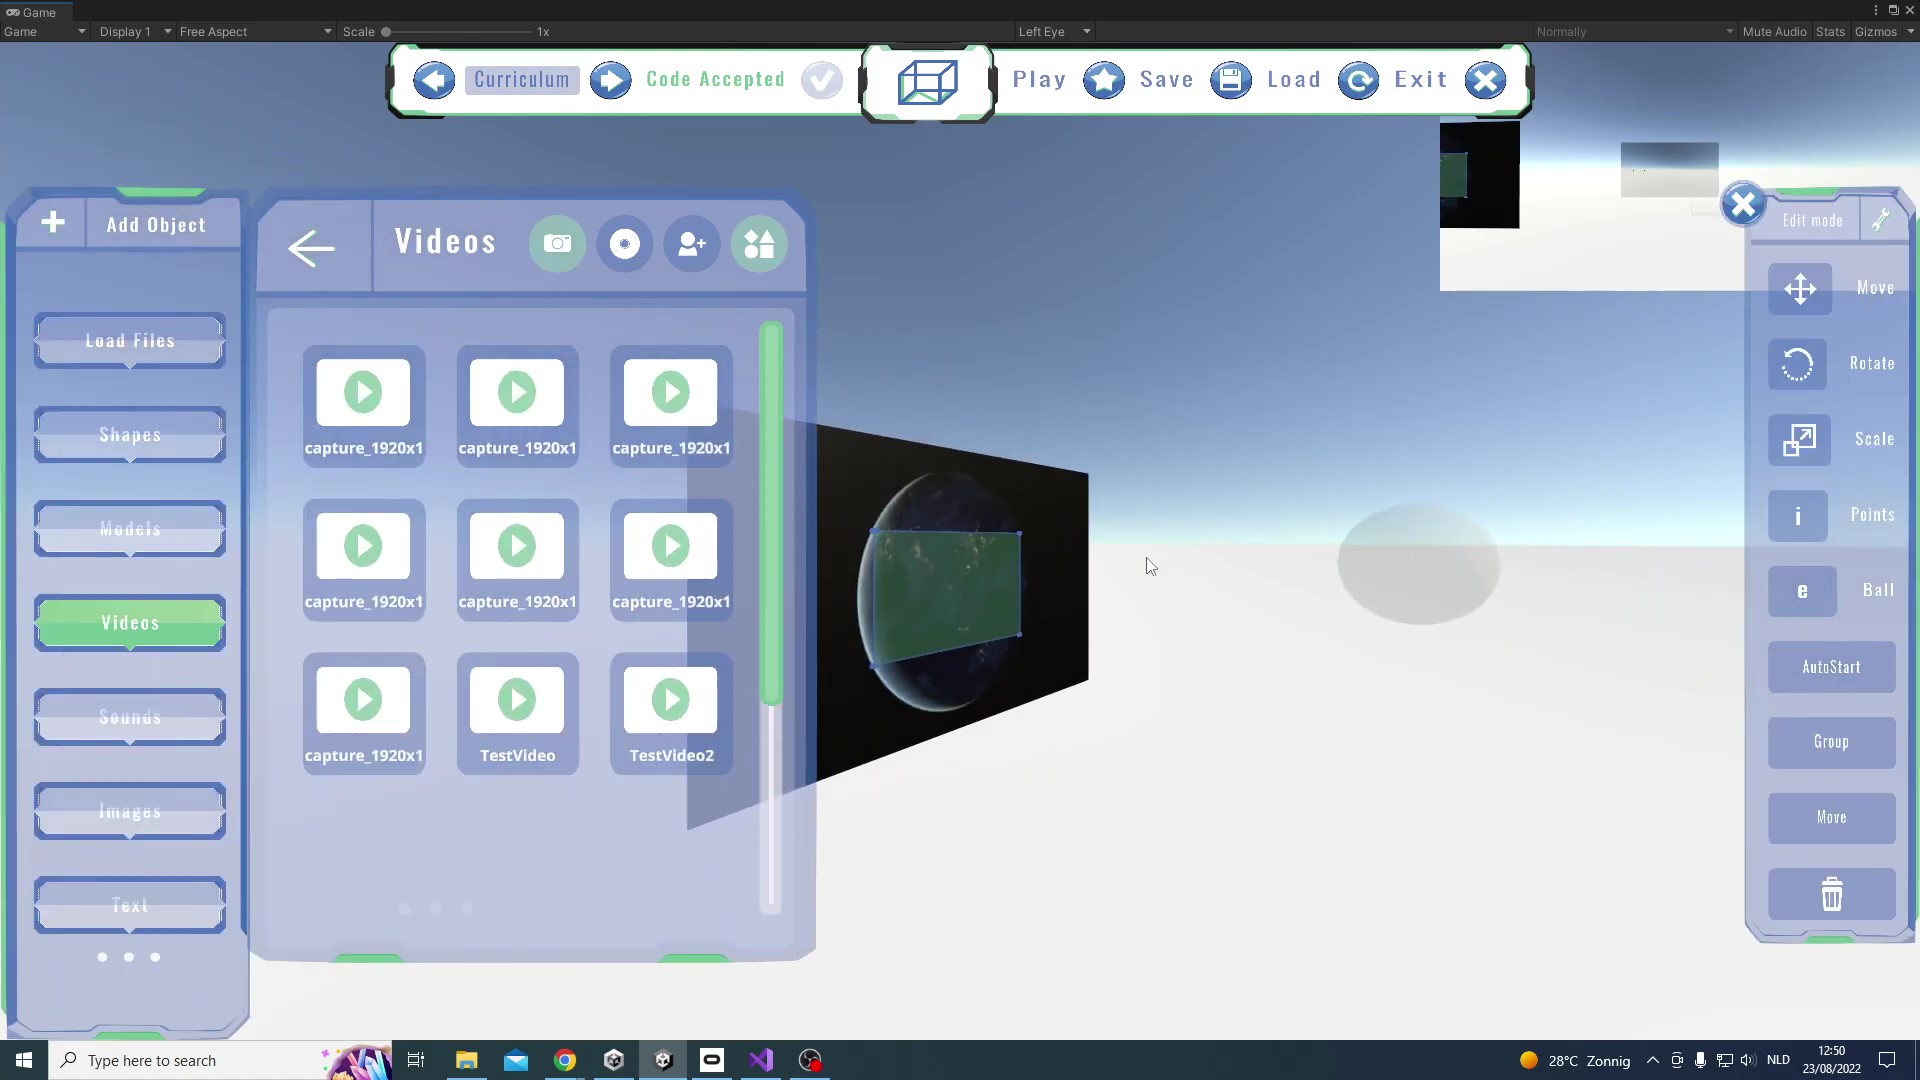 127 - VR PowerPoint screenshot1.jpg